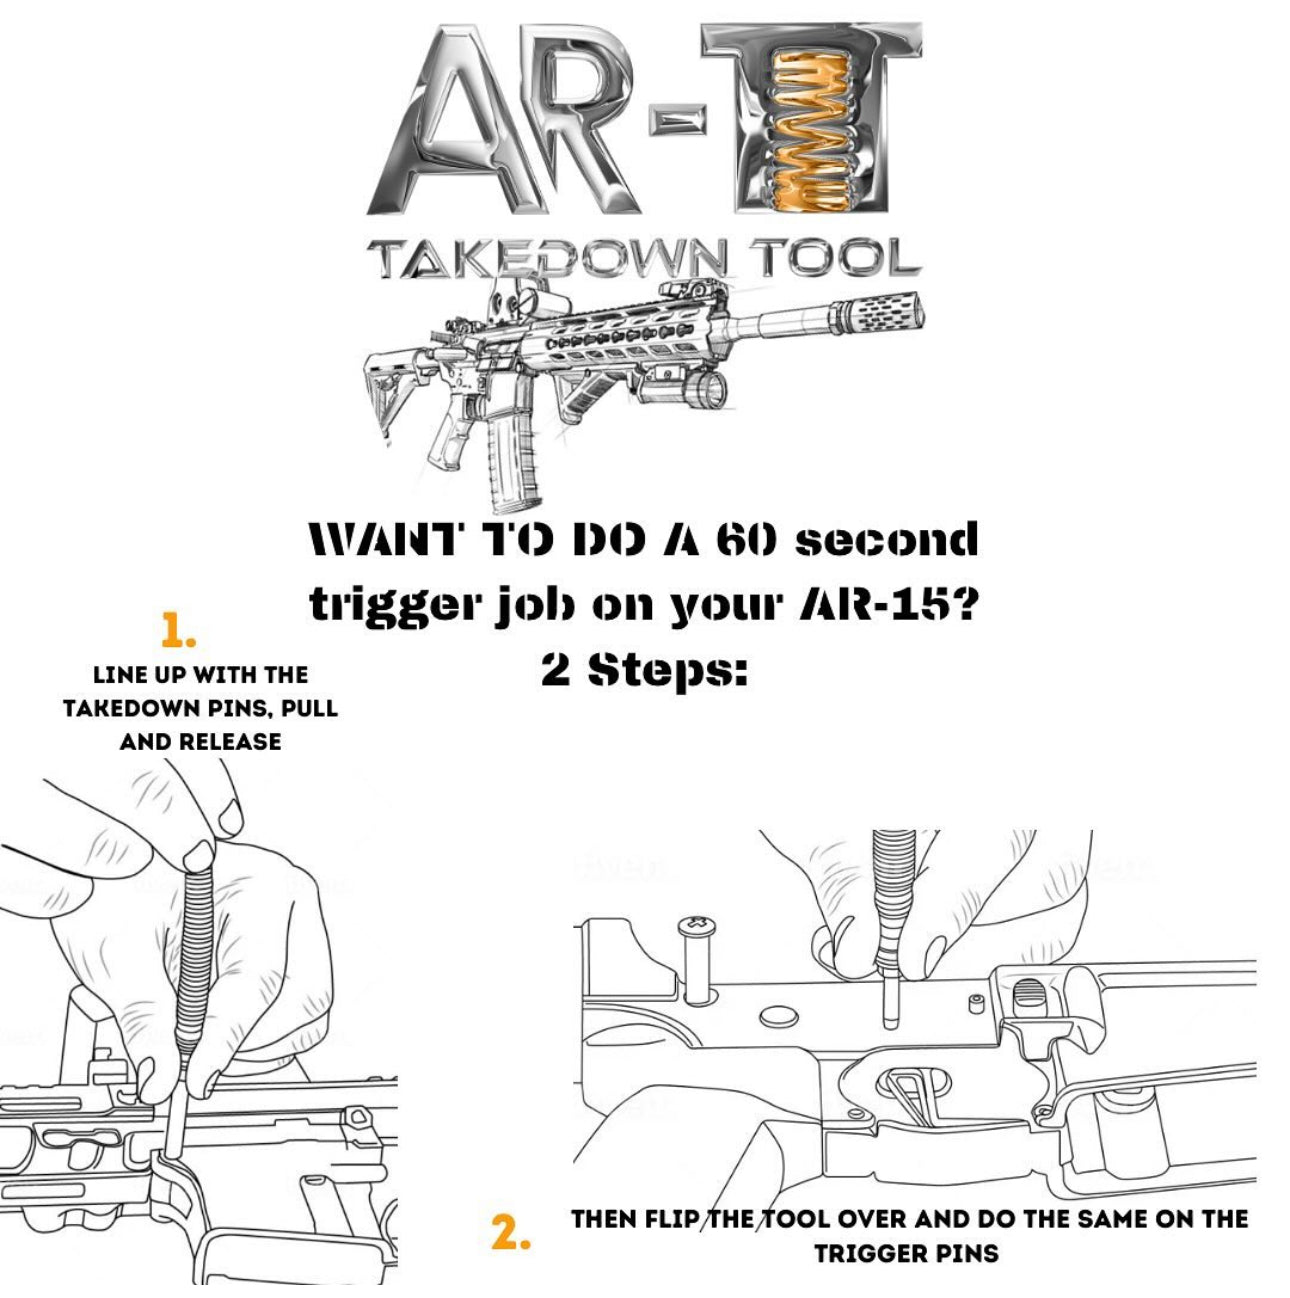 How Often Should You Fieldstrip Your Firearm: Using the Takedown Tool